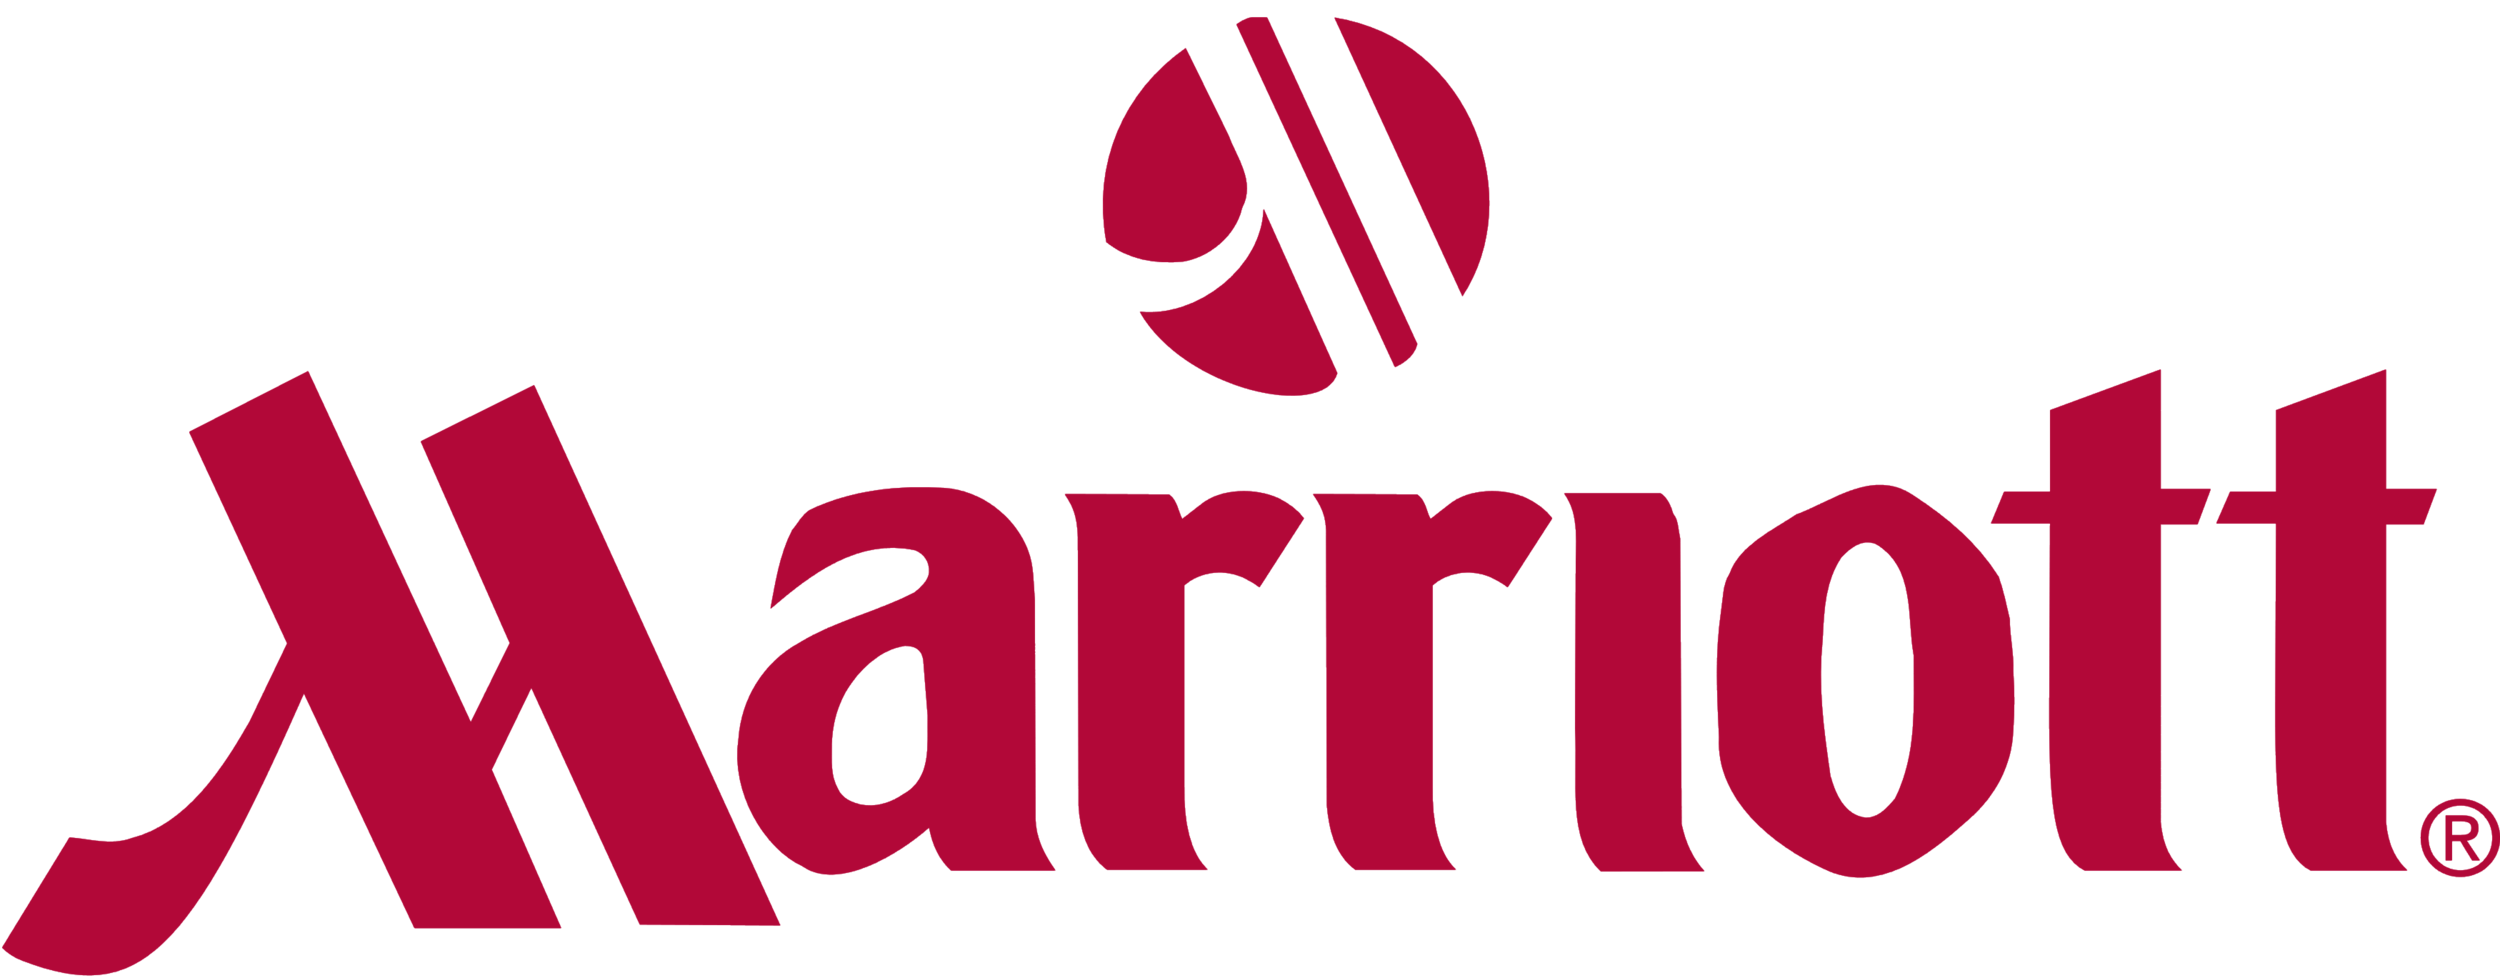 Marriott_logo_pink.png